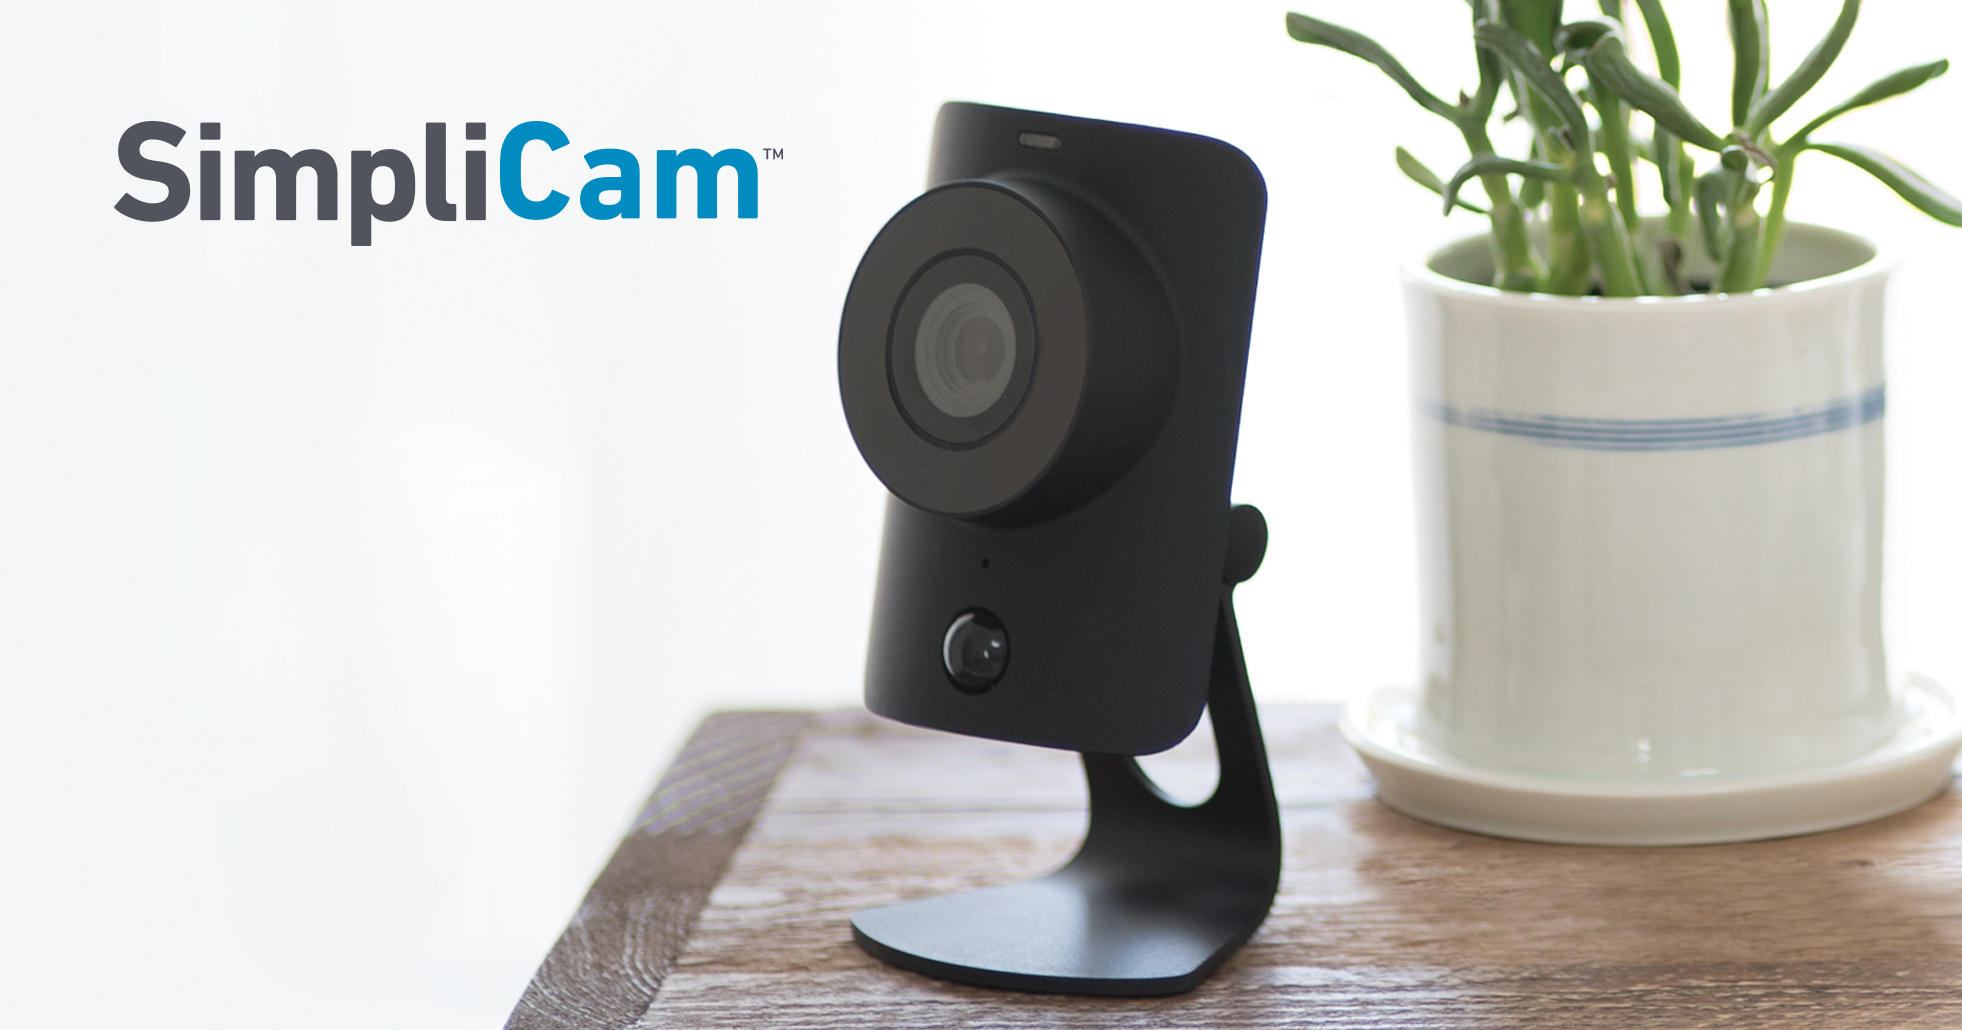 simplicam security camera